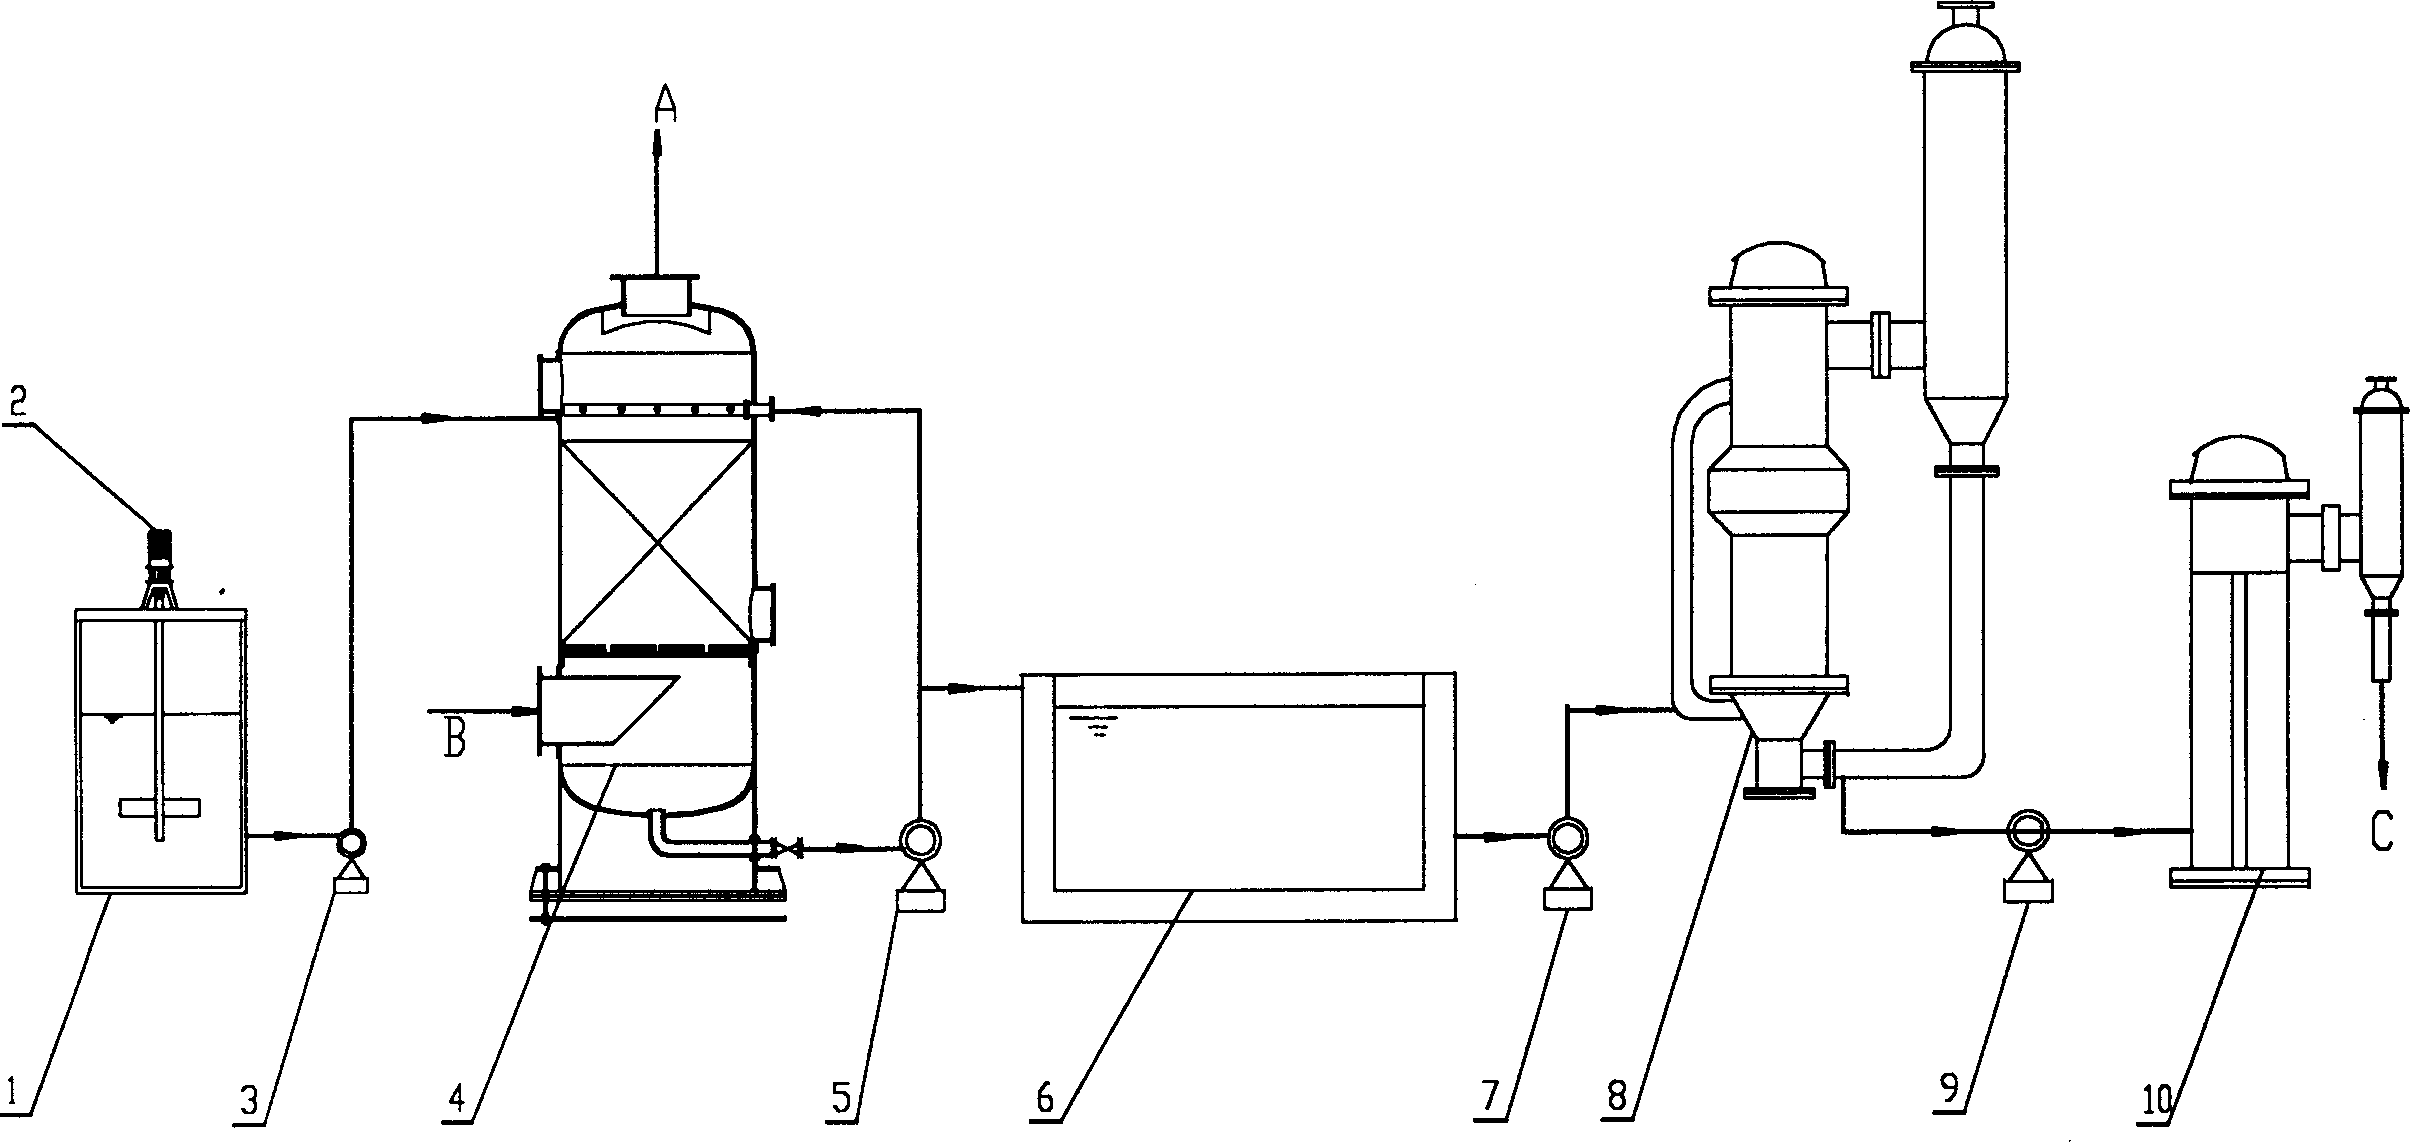 Wet urea additive process for simultanously desulfurizing and denitrification